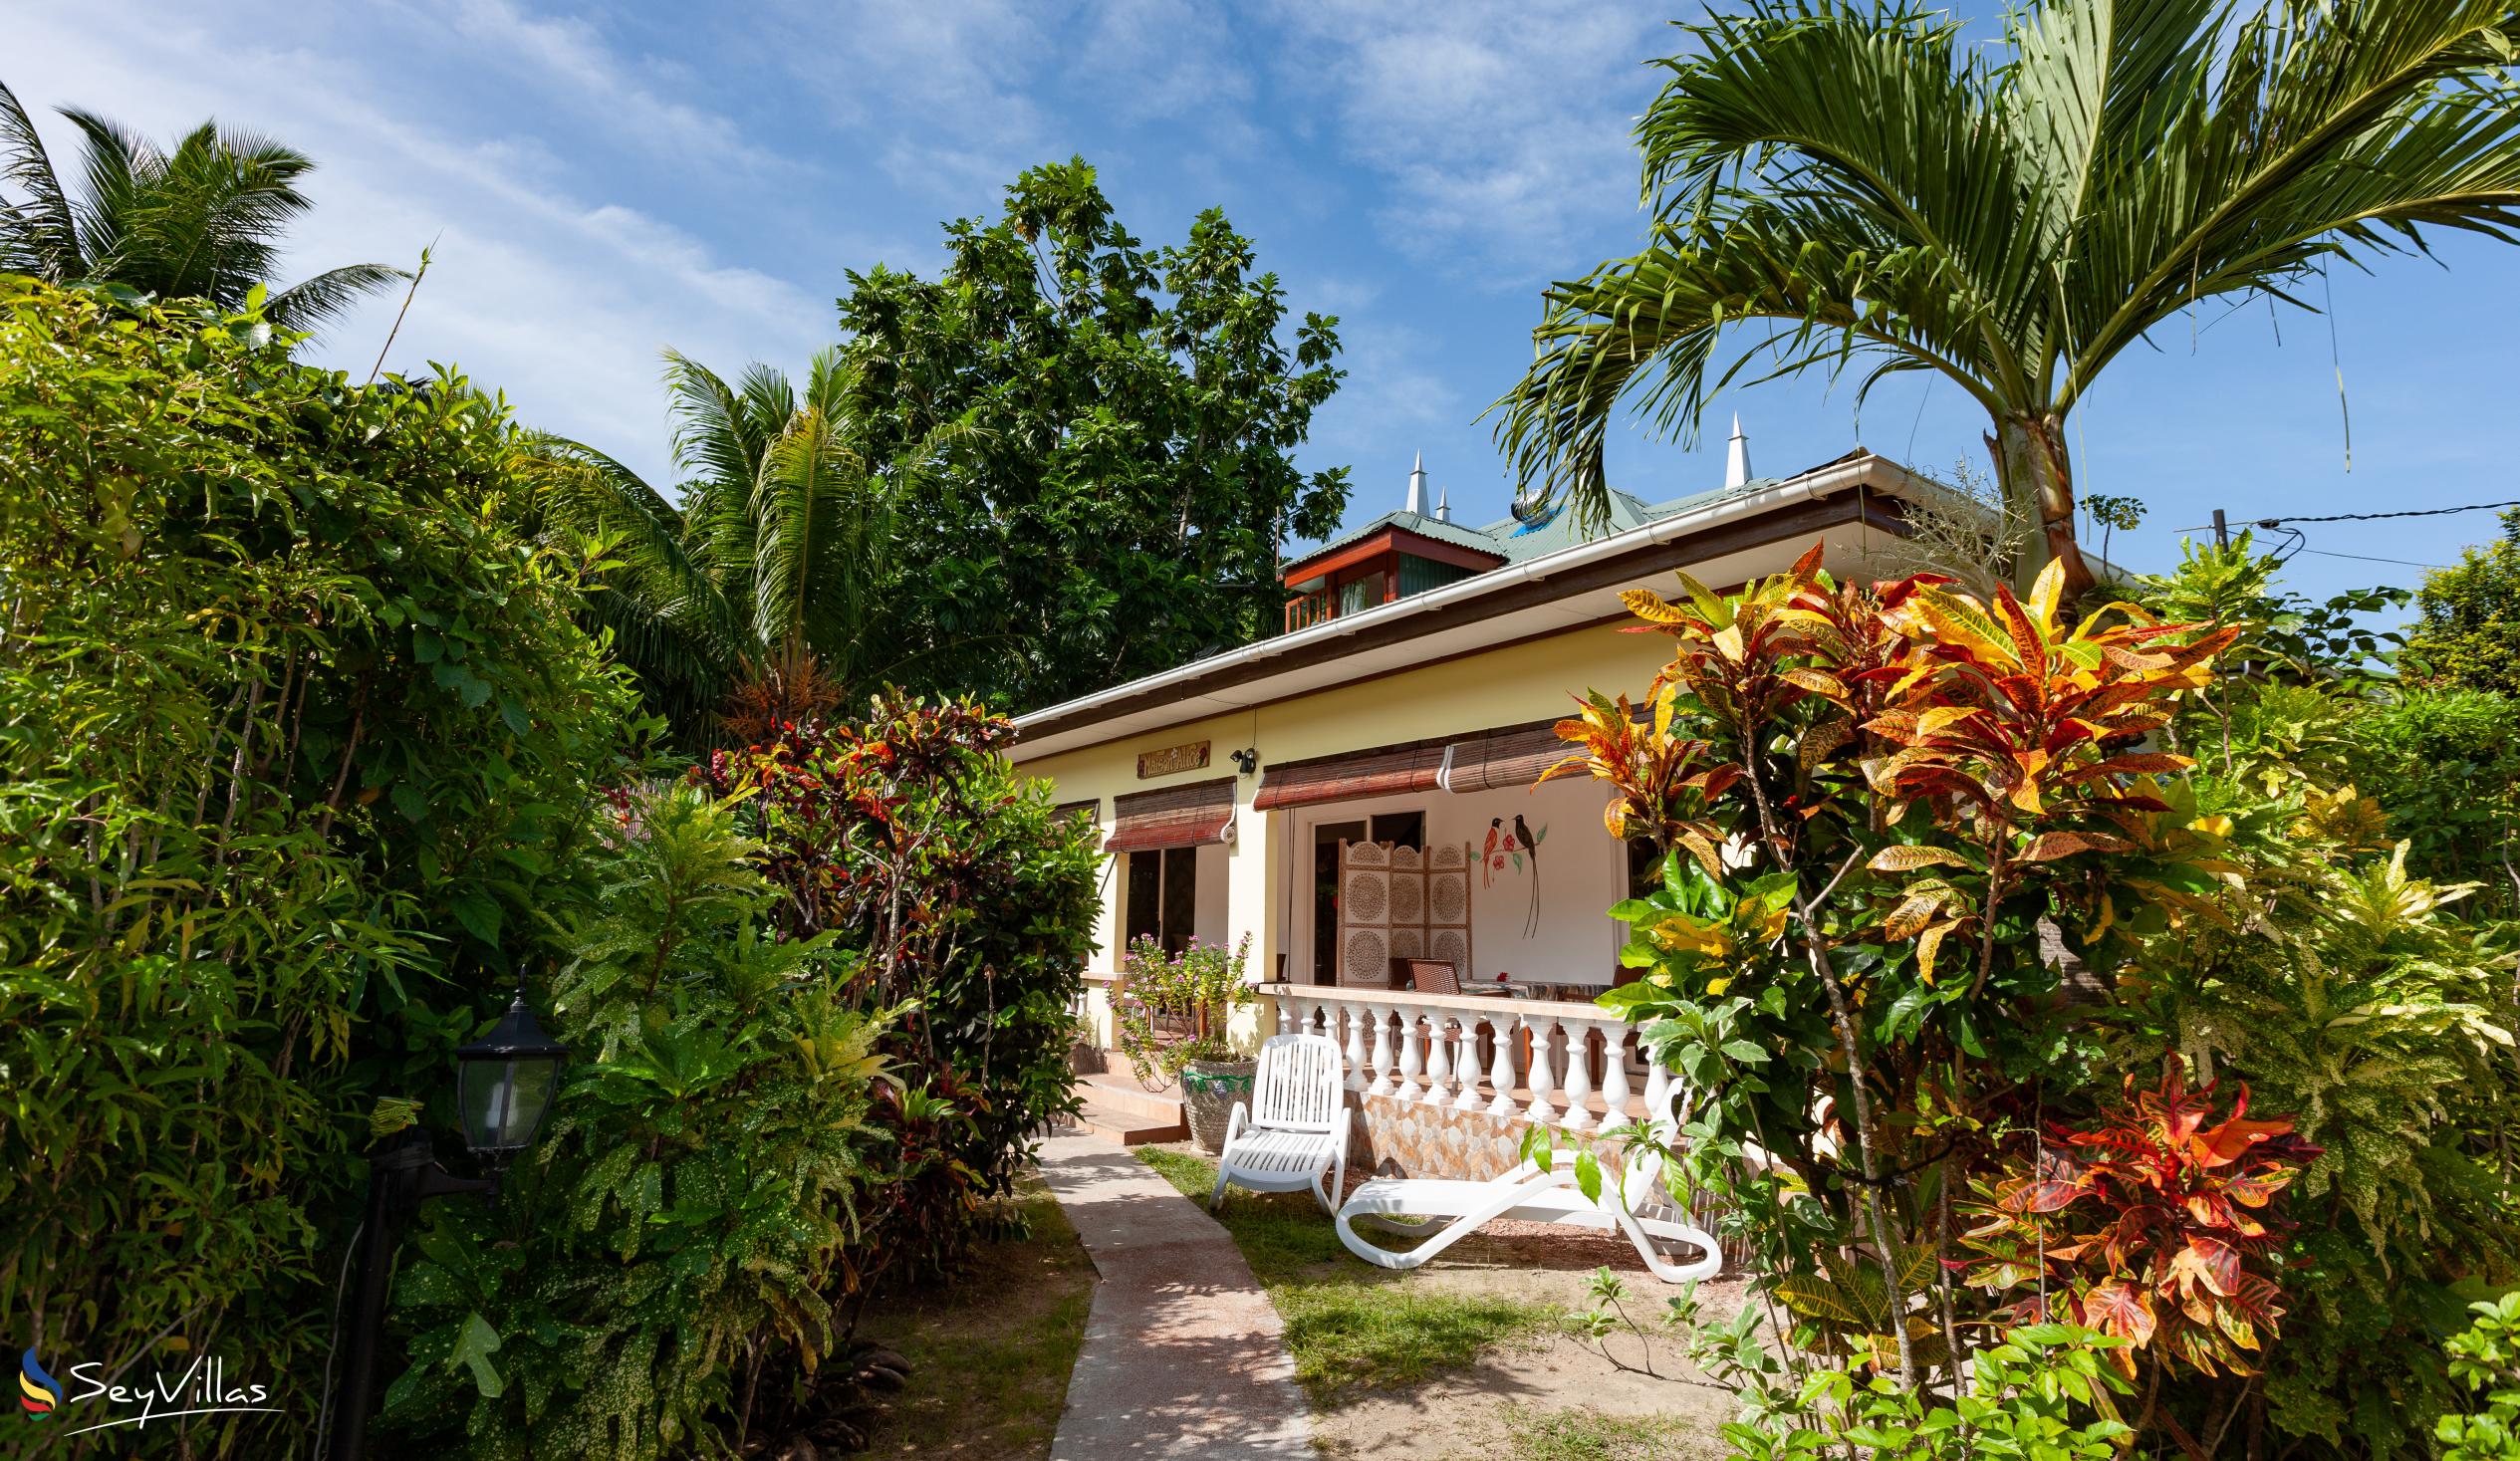 Photo 1: Pension Hibiscus - Outdoor area - La Digue (Seychelles)